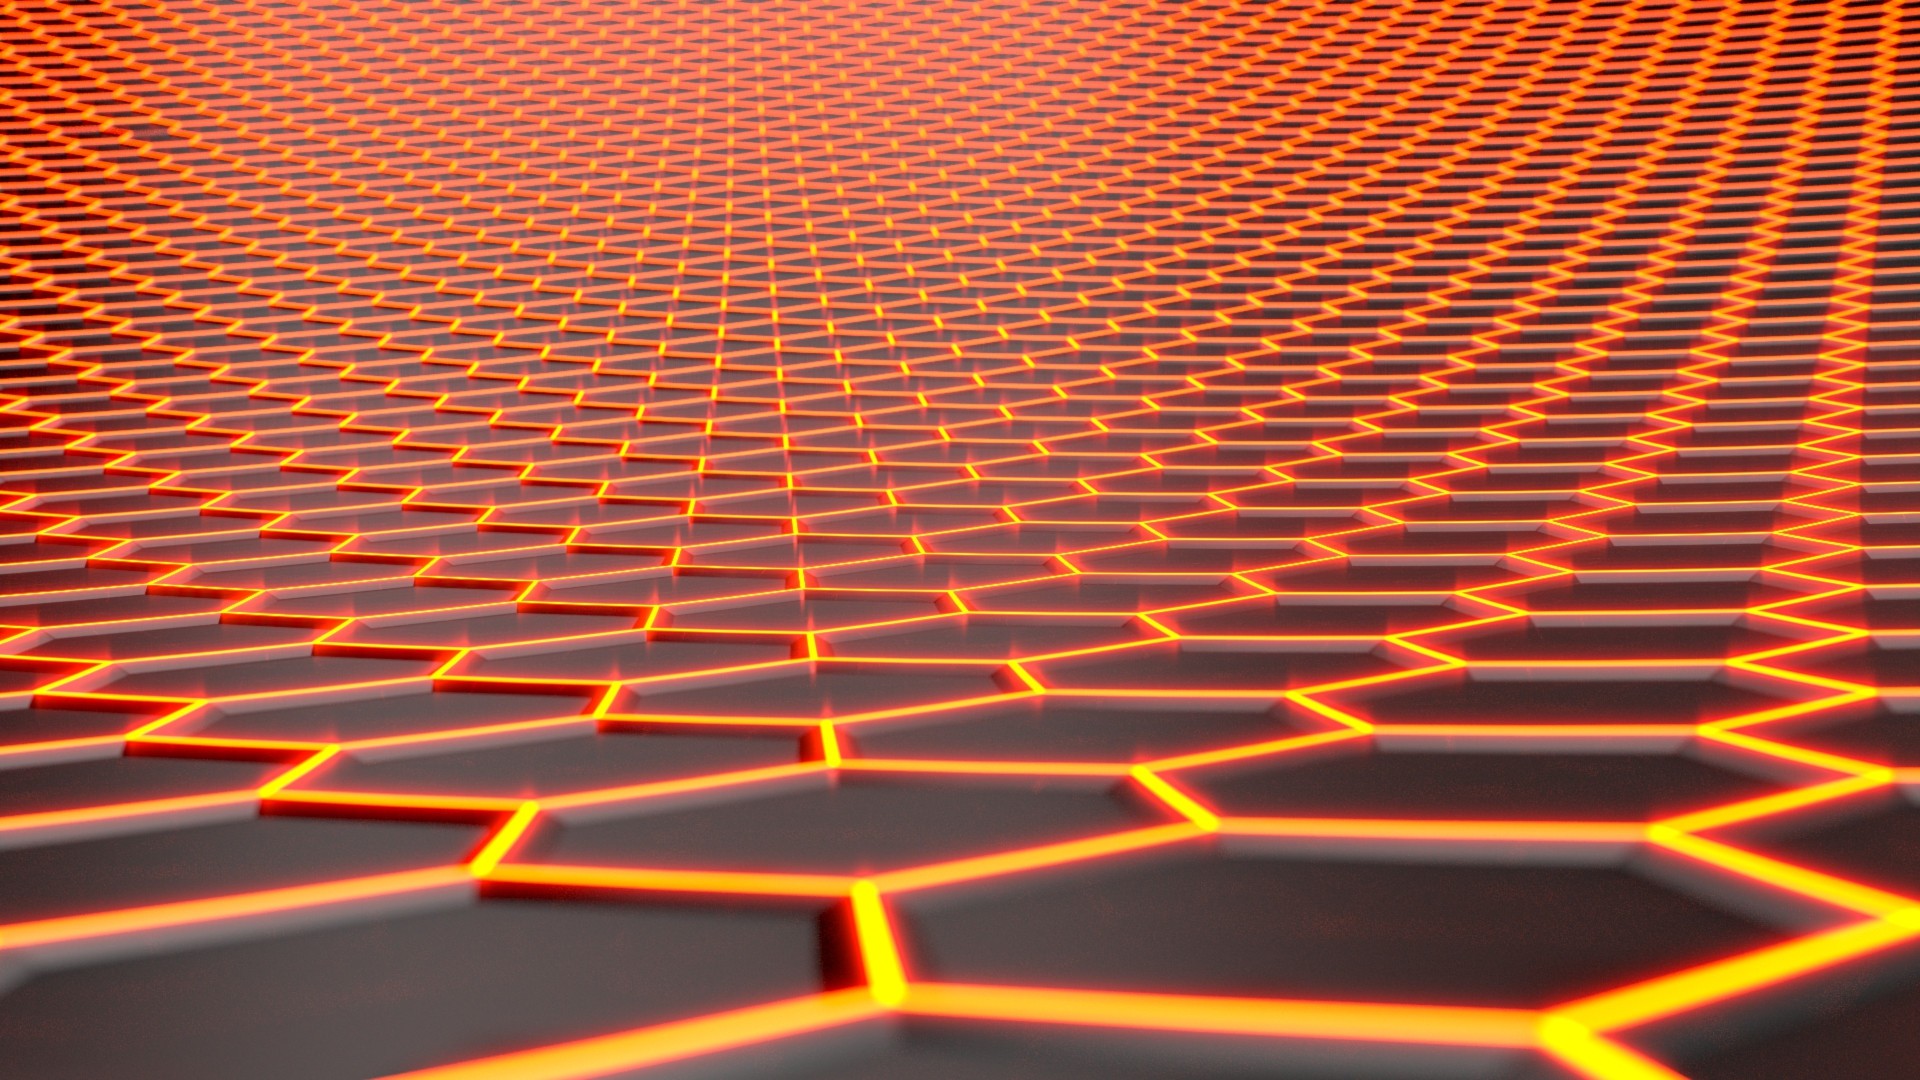 hexagon, Honeycombs, CGI, Abstract pattern Wallpaper